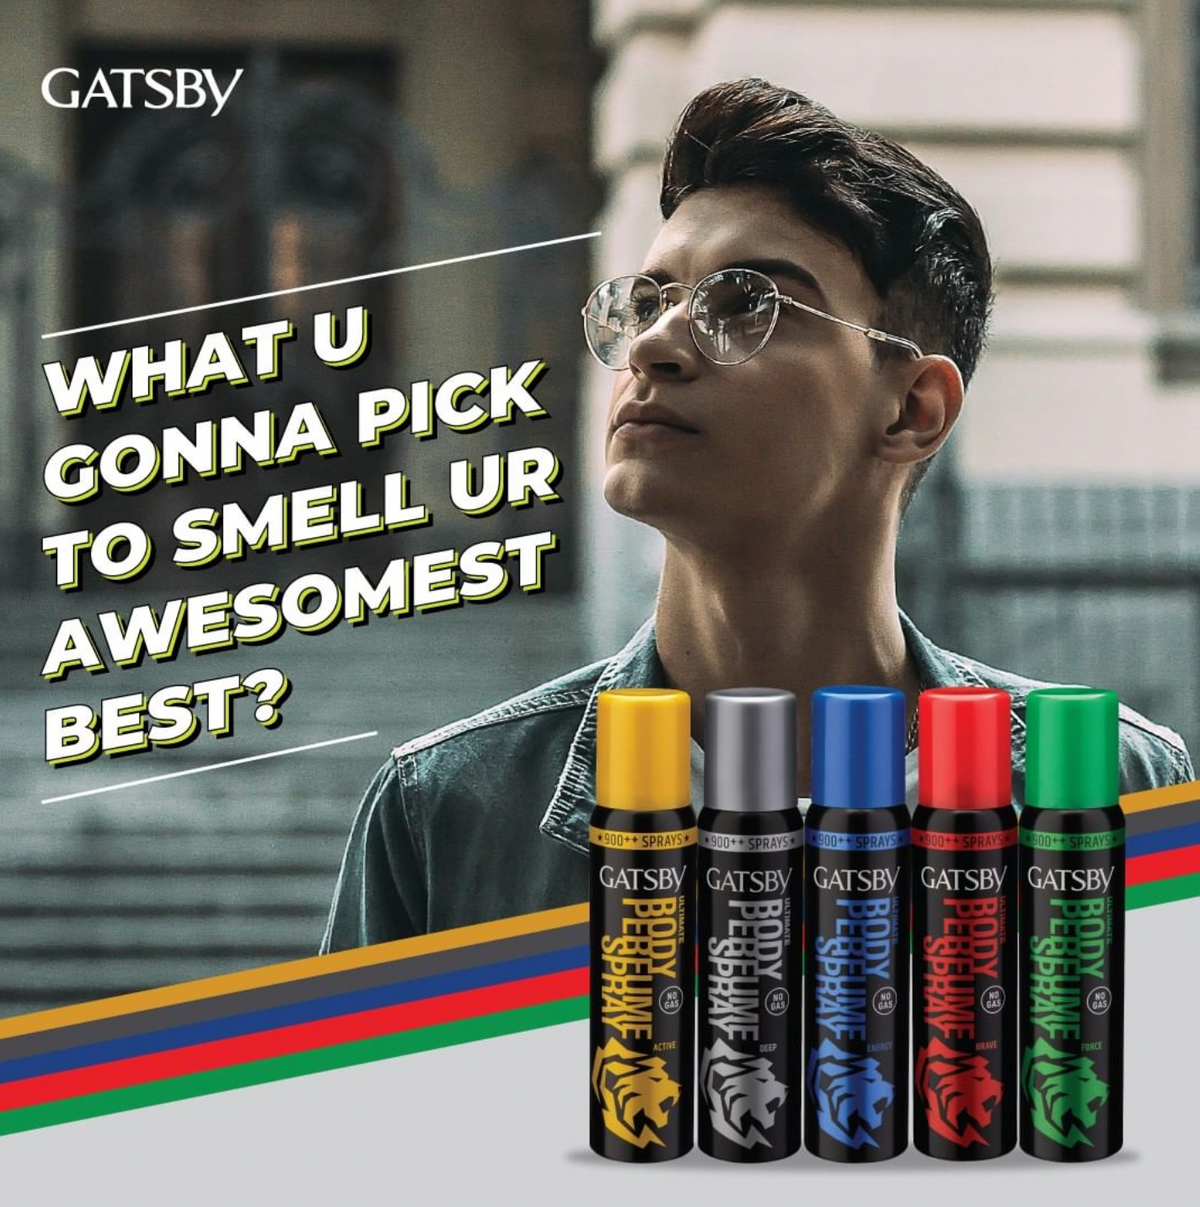 Gatsby Ultimate Body Perfume Spray - Force, 120 ml : Buy 1 Get 1 Free! Gardenia Cosmotrade LLP